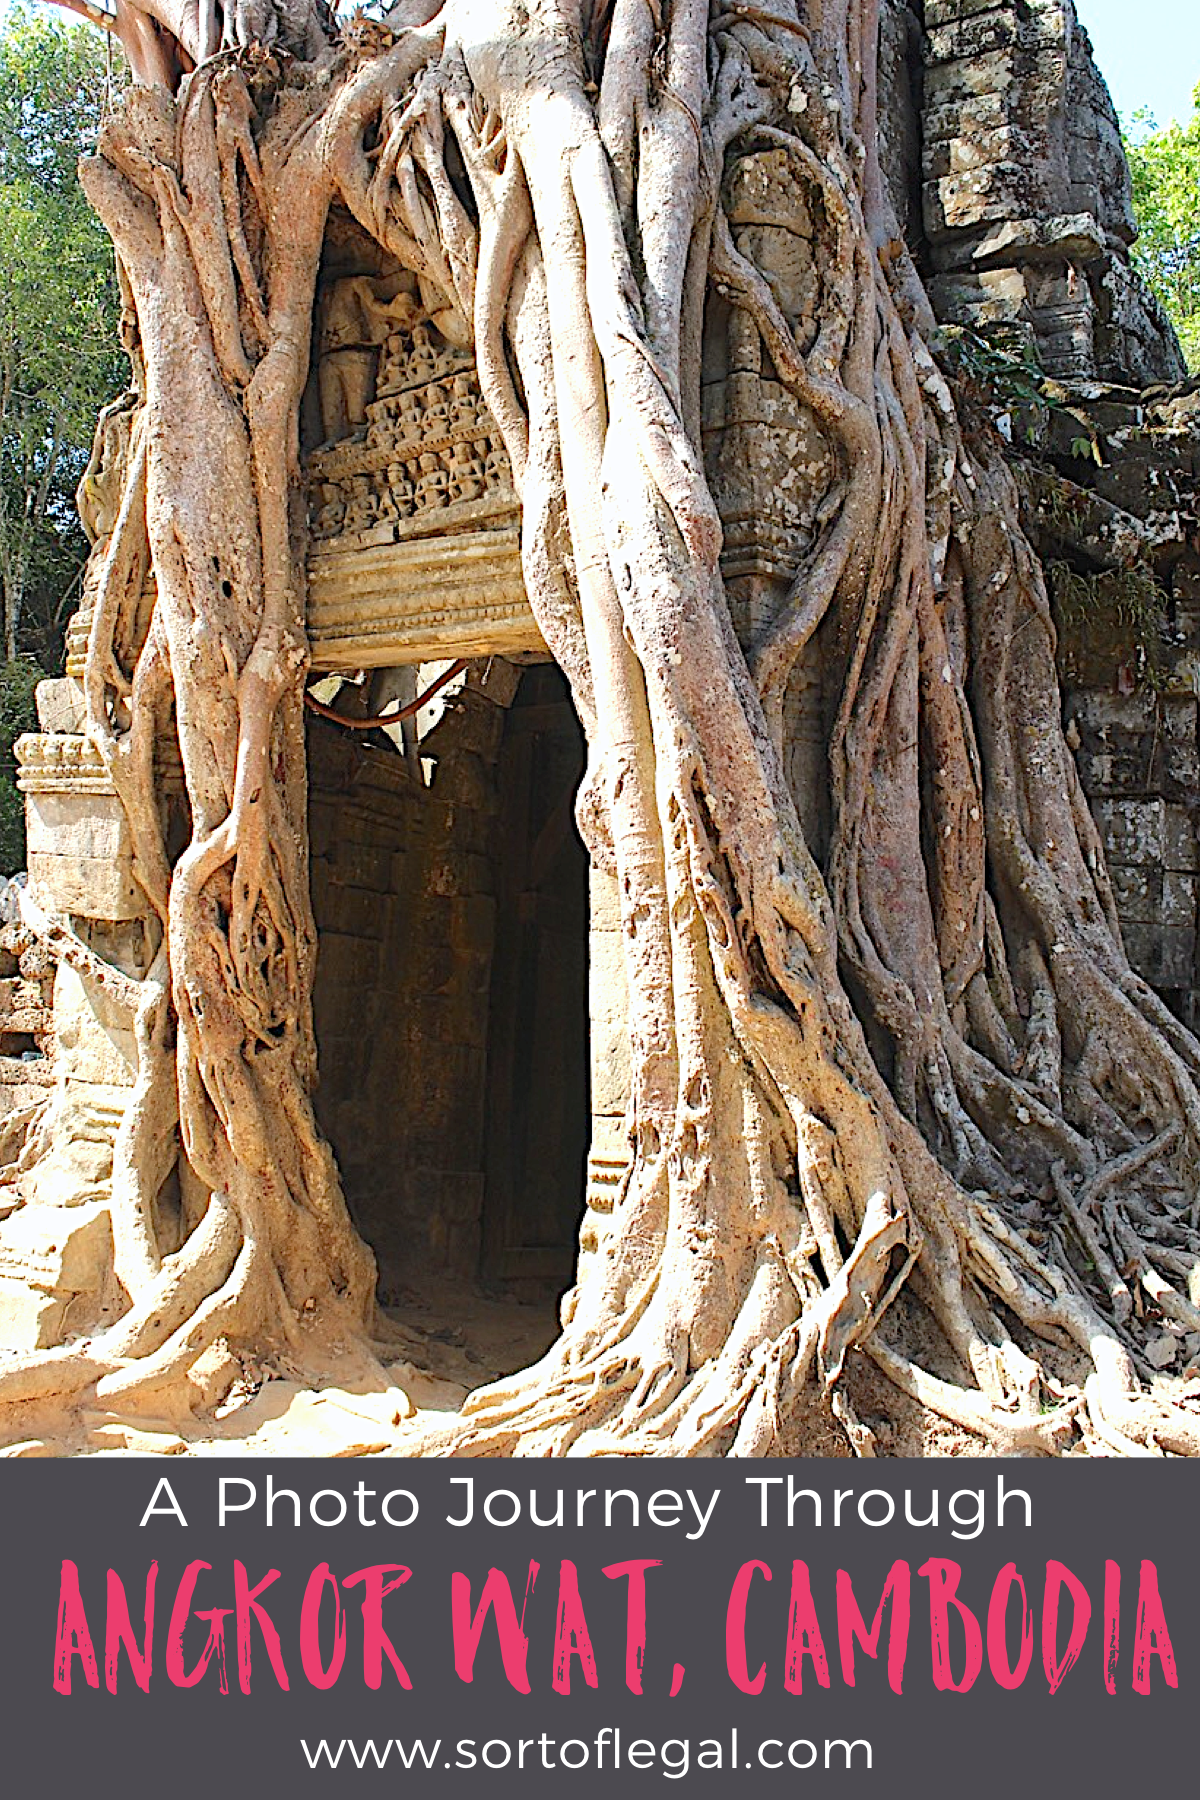 Photo Journal of Tuk Tuk Tour of Angkor Wat, Cambodia